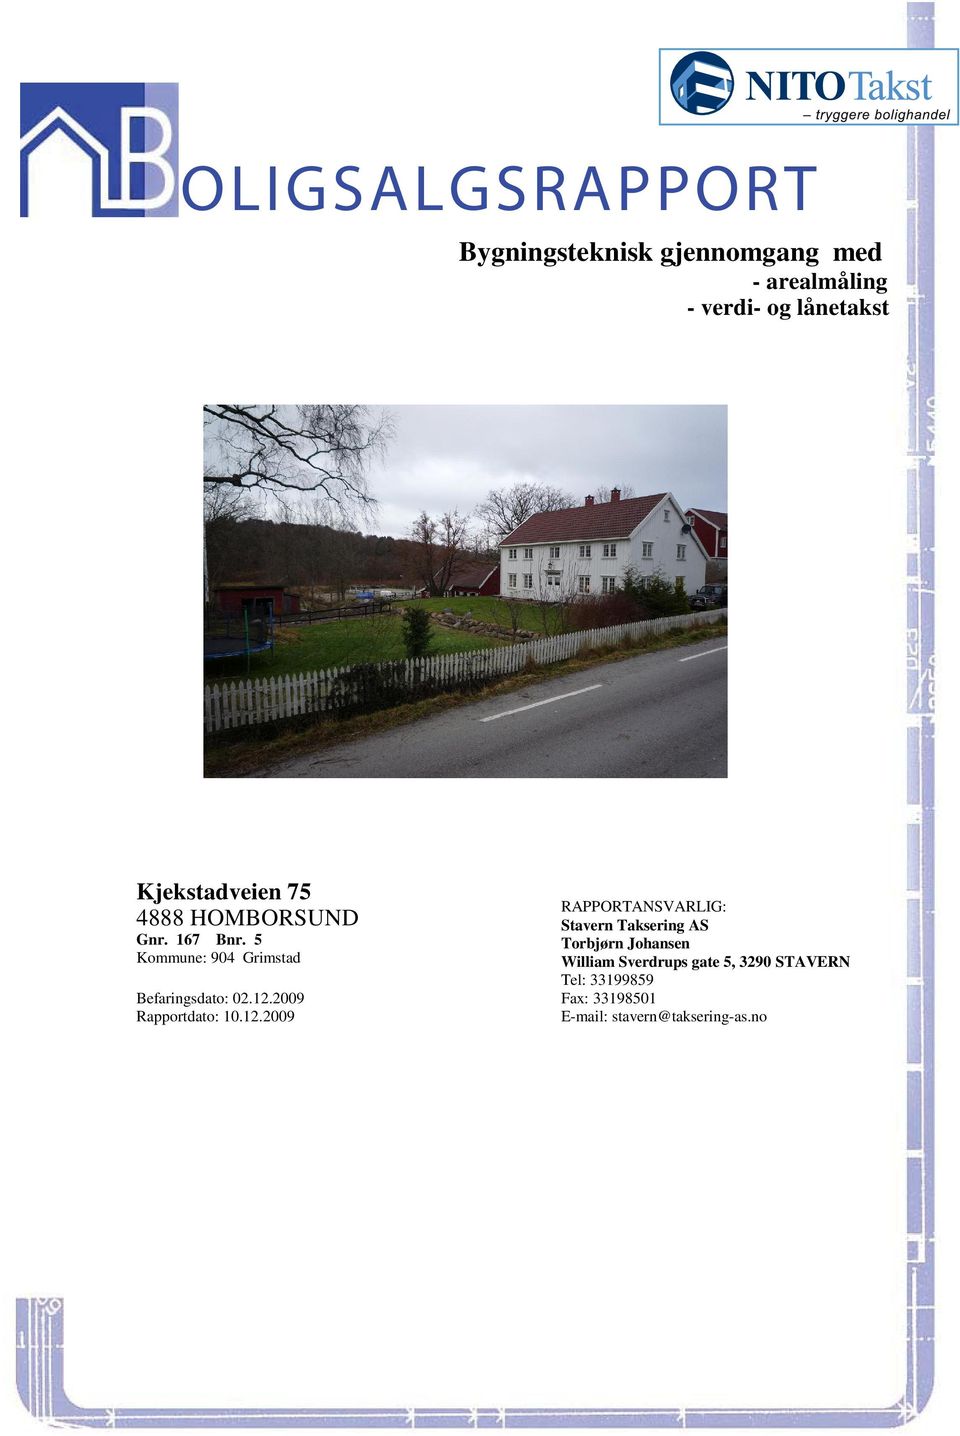 Taksering AS Gnr 167 Bnr 5 Torbjørn Johansen Kommune: 904 Grimstad William